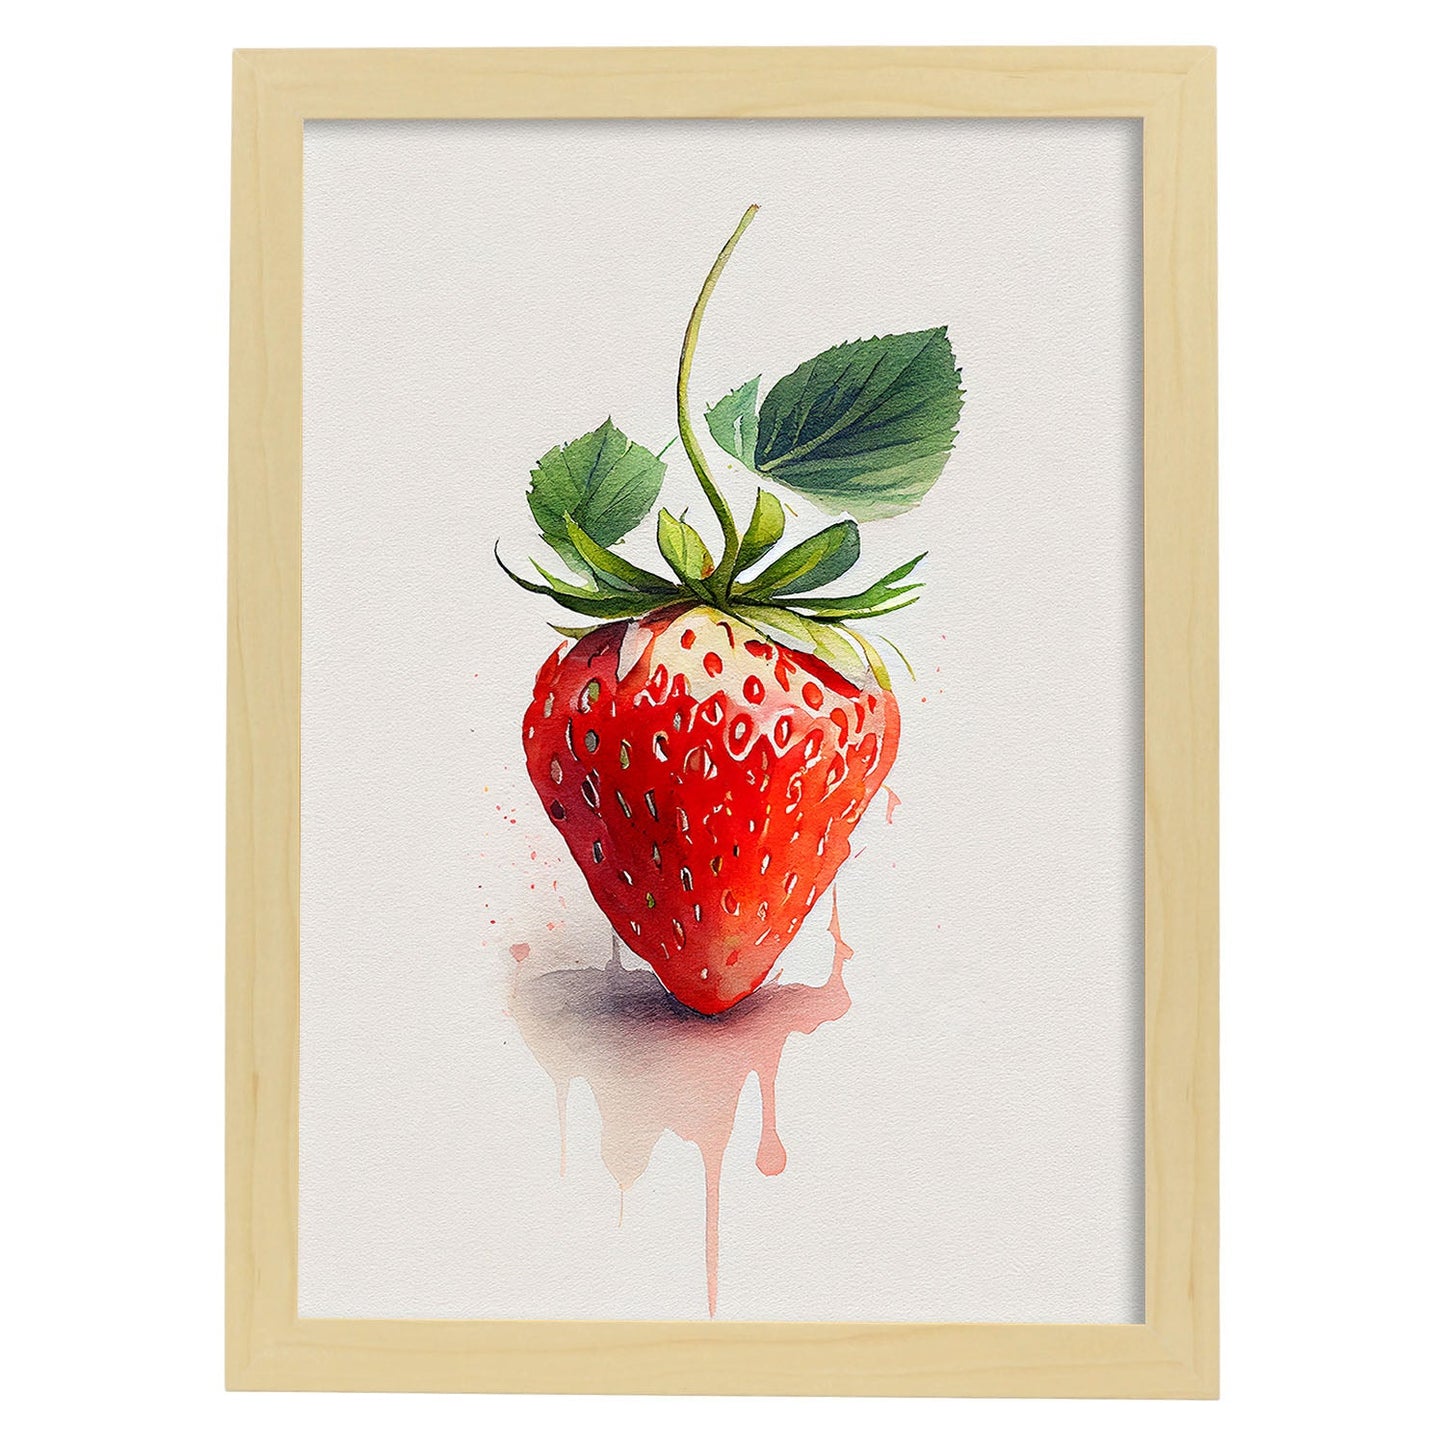 Nacnic minimalist Strawberry_1. Aesthetic Wall Art Prints for Bedroom or Living Room Design.-Artwork-Nacnic-A4-Marco Madera Clara-Nacnic Estudio SL